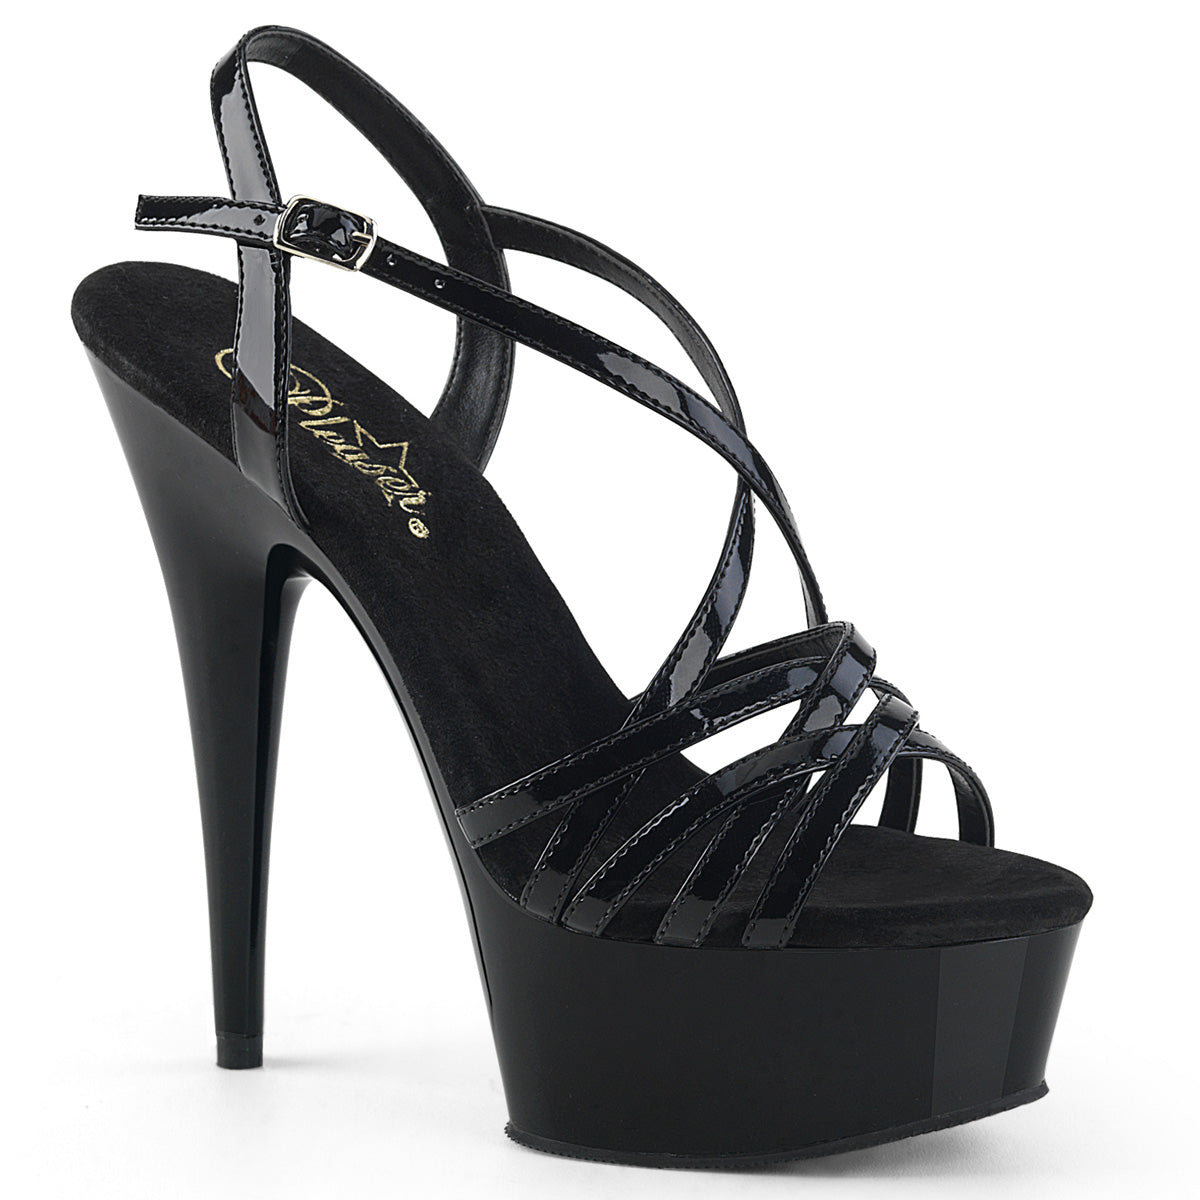 DELIGHT-613 6" Heel Black Patent  Stripper Platforms High Heels